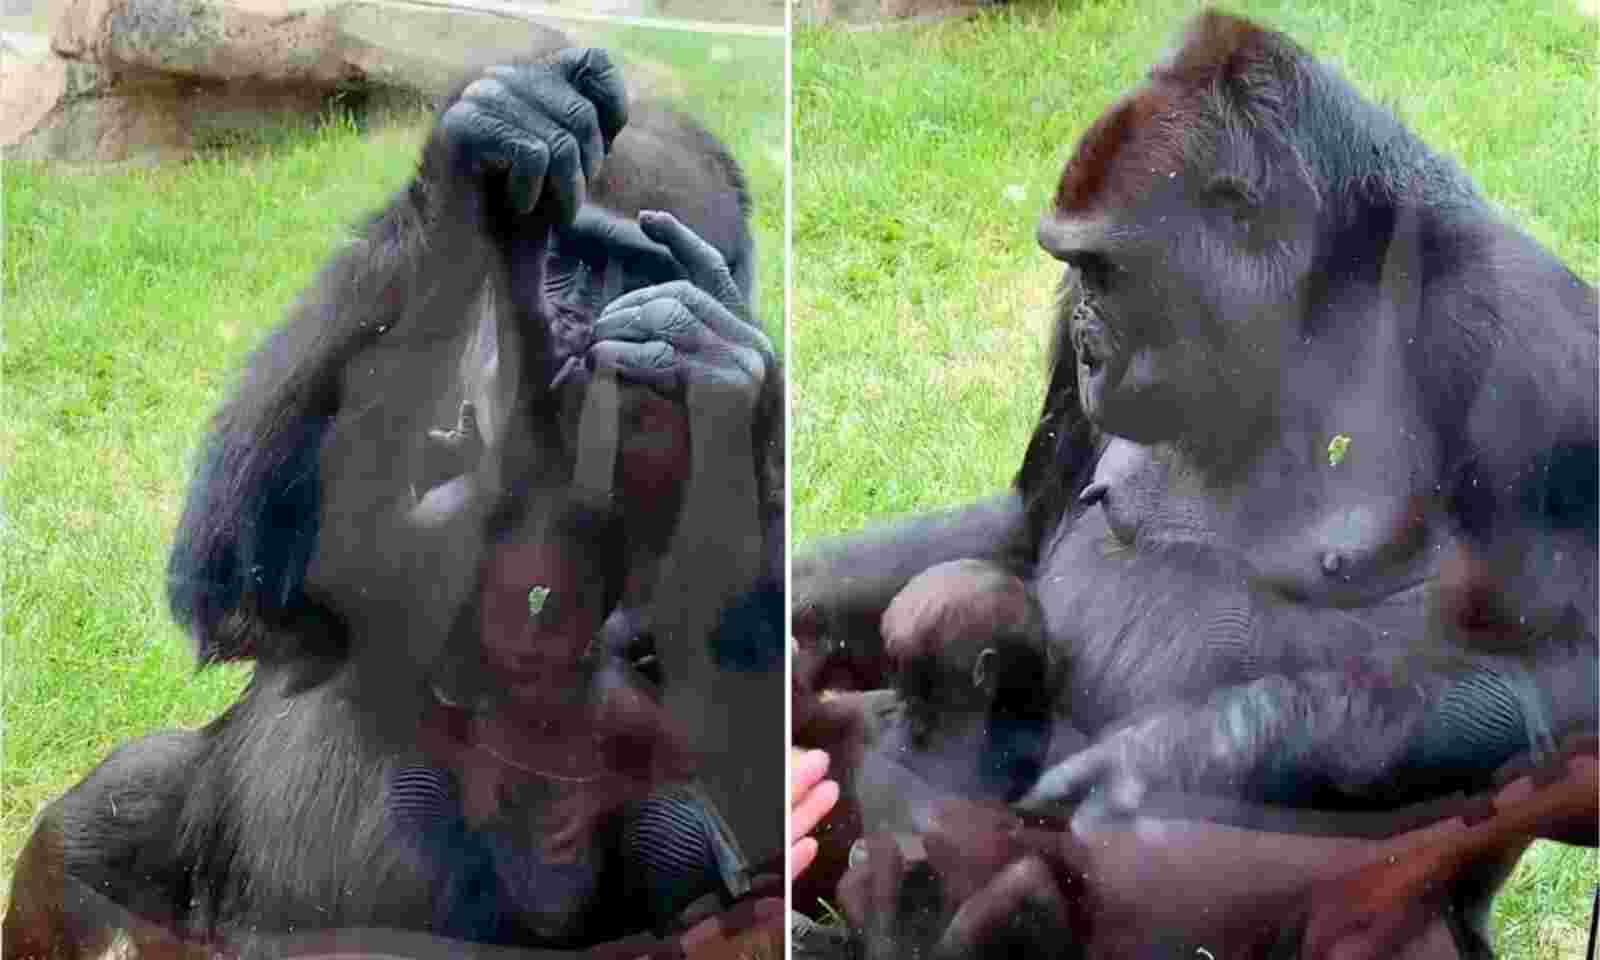 Baby gorilla shows off his bouffant hair-do in Virunga National